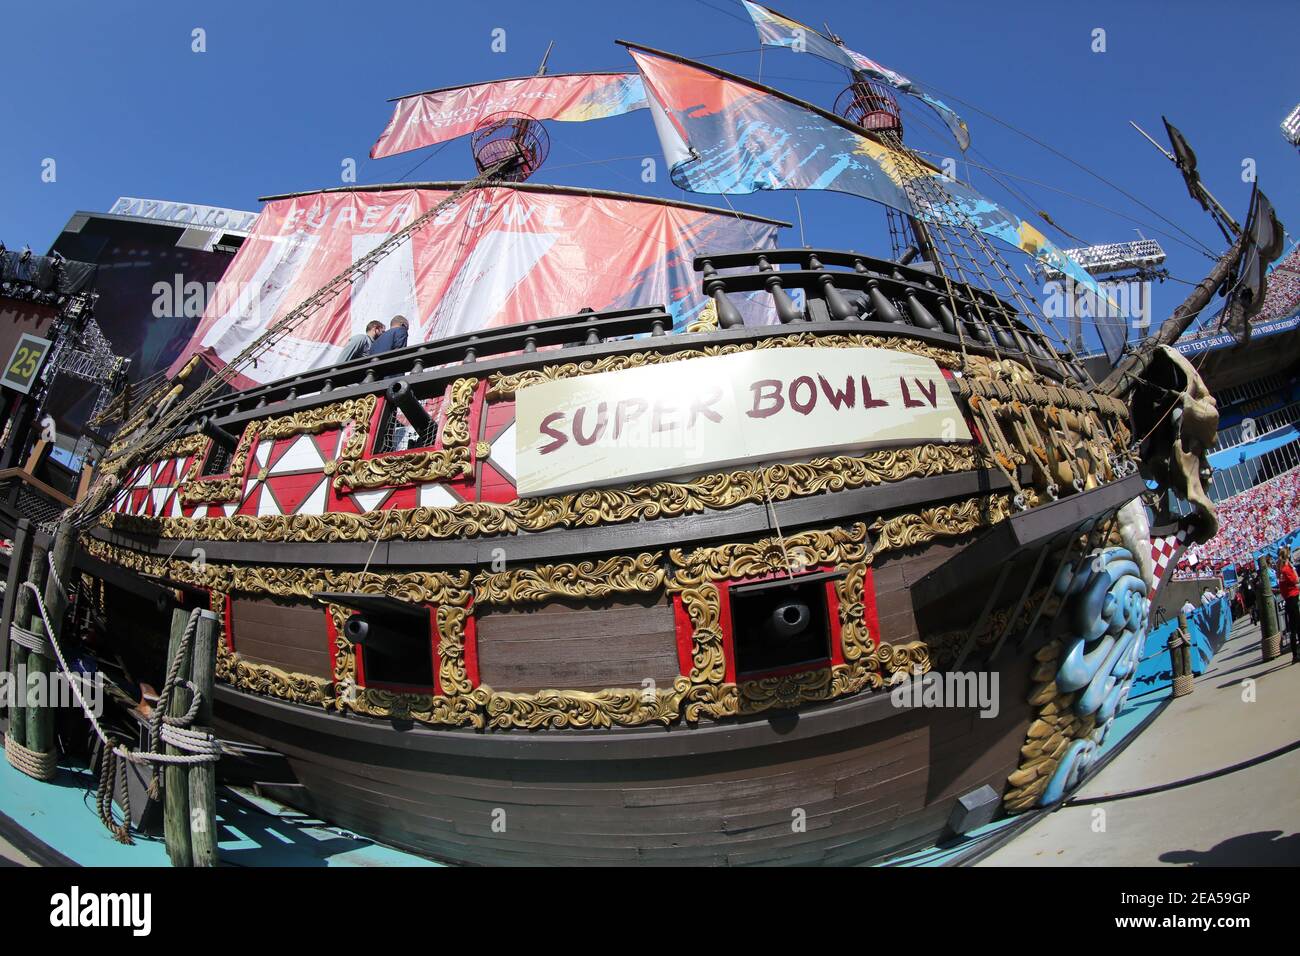 Pirate ship at Raymond James Stadium ahead of Super Bowl LV 